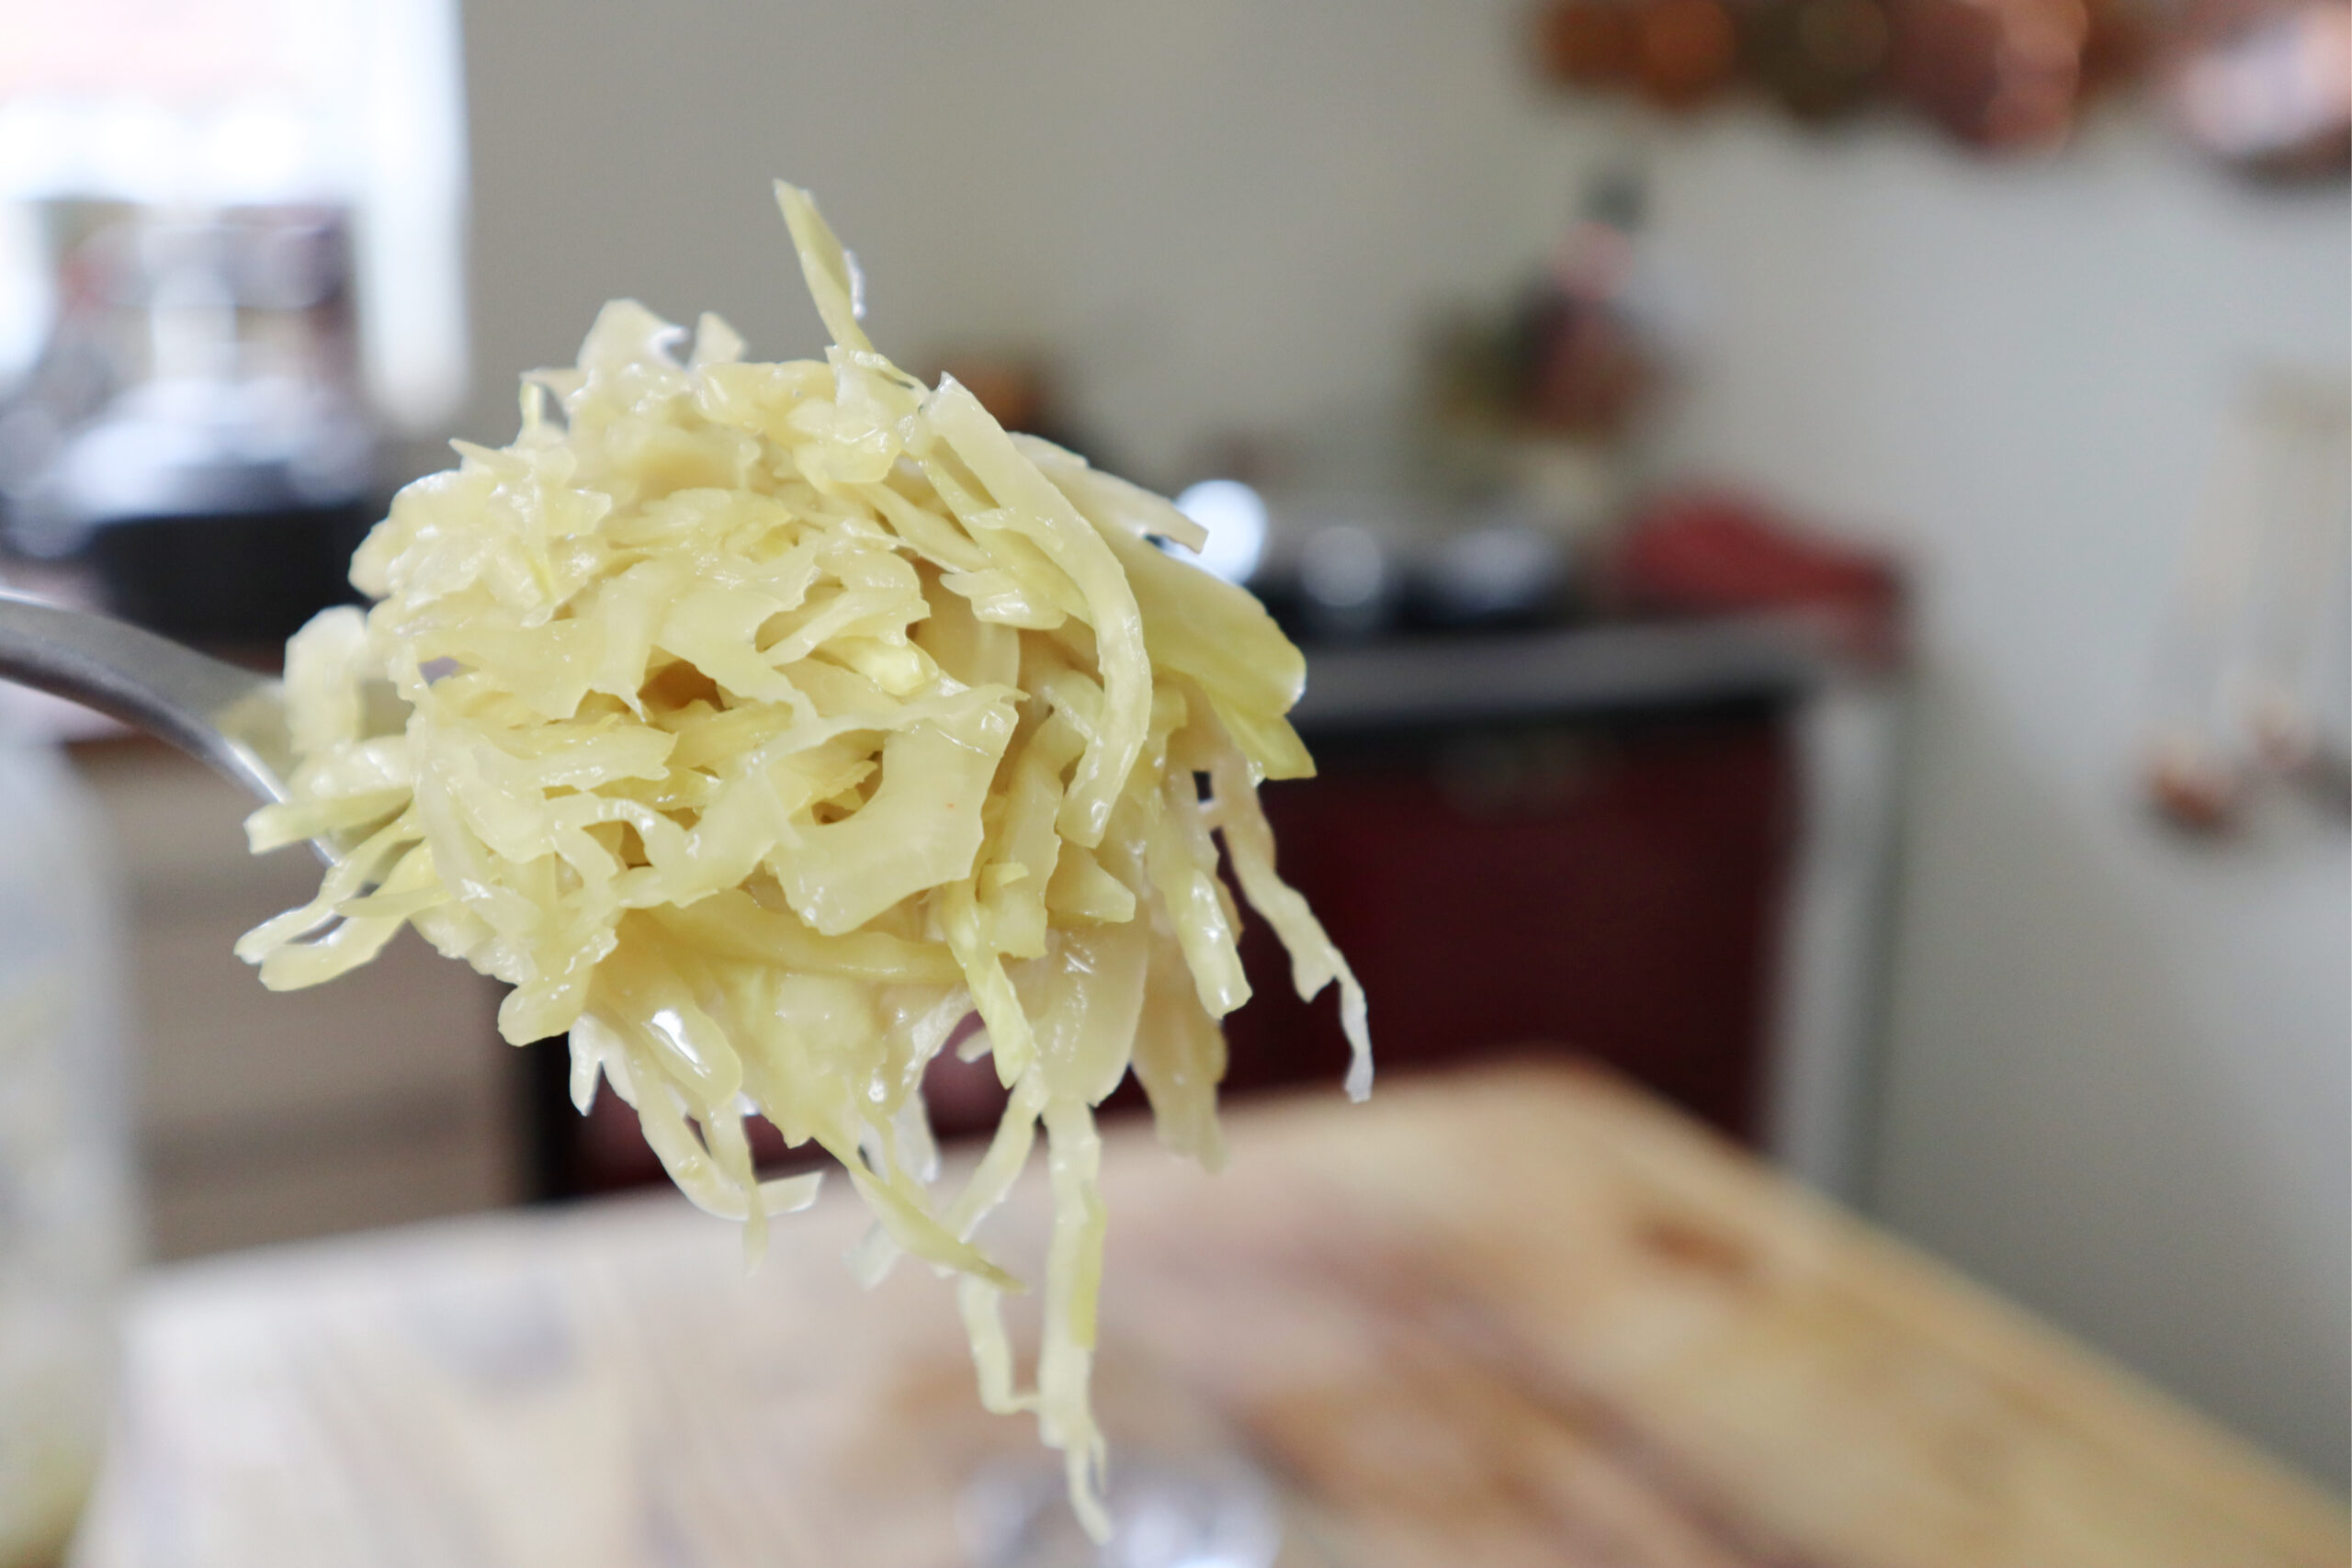 How to make Easy Homemade Sauerkraut